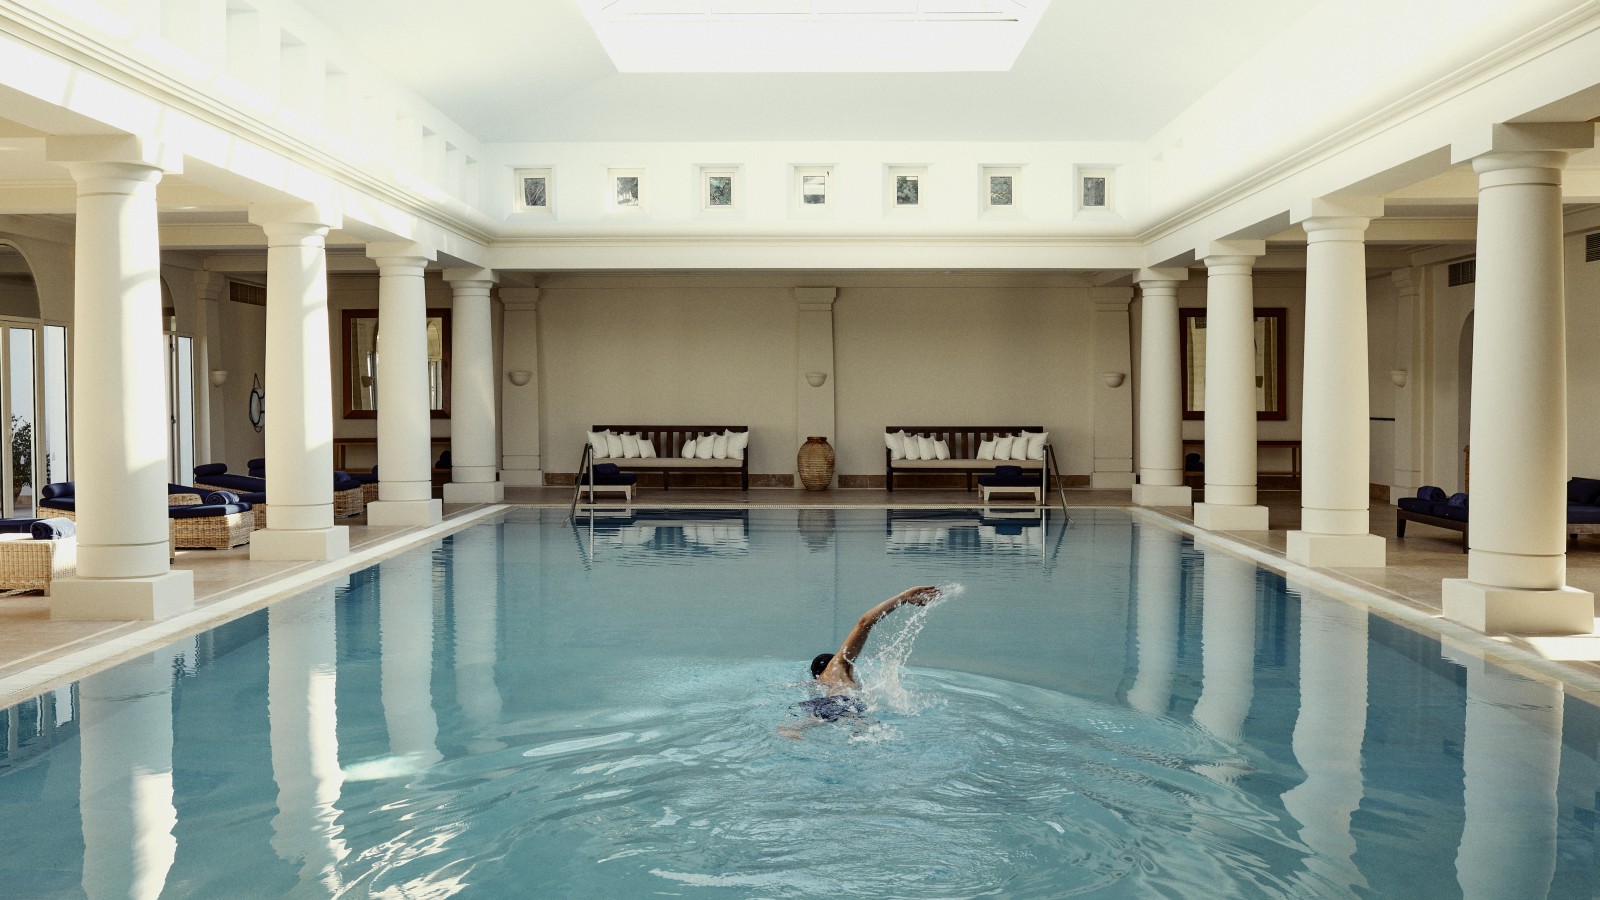 The luxury indoor pool at the Anassa